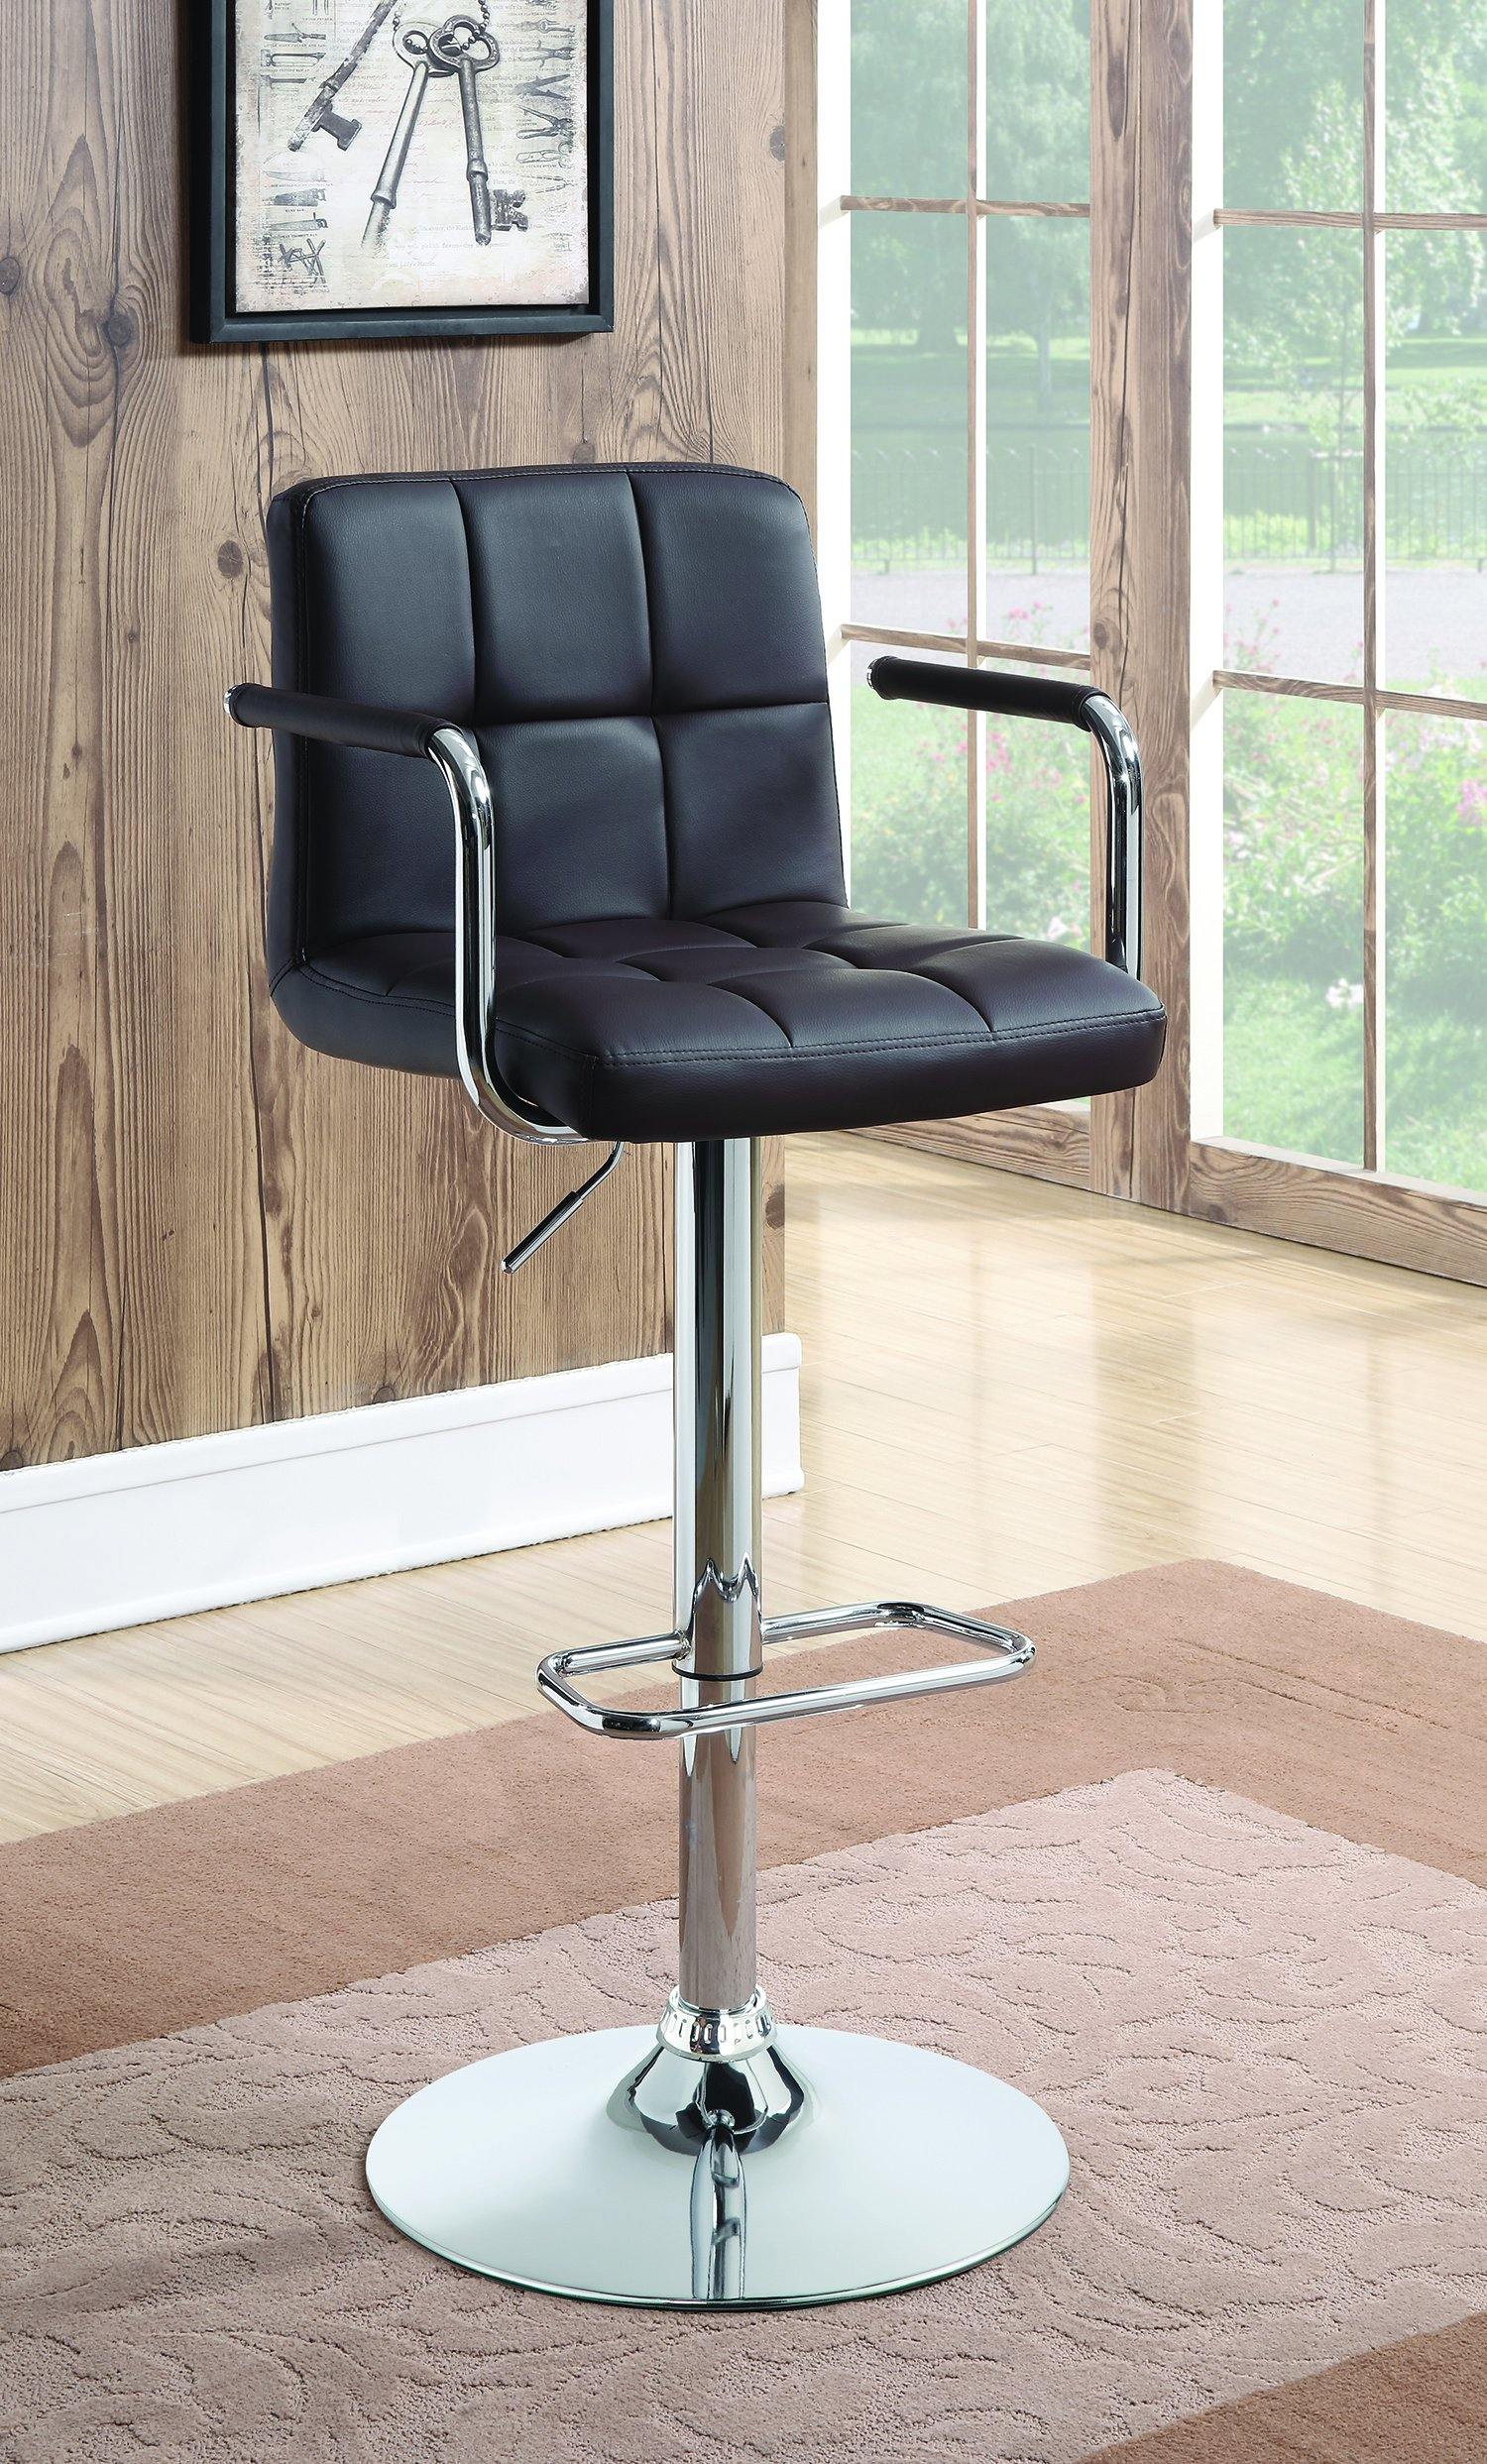 Rec room/bar stools: height adjustable 121099 adjustable bar stool By coaster - sofafair.com